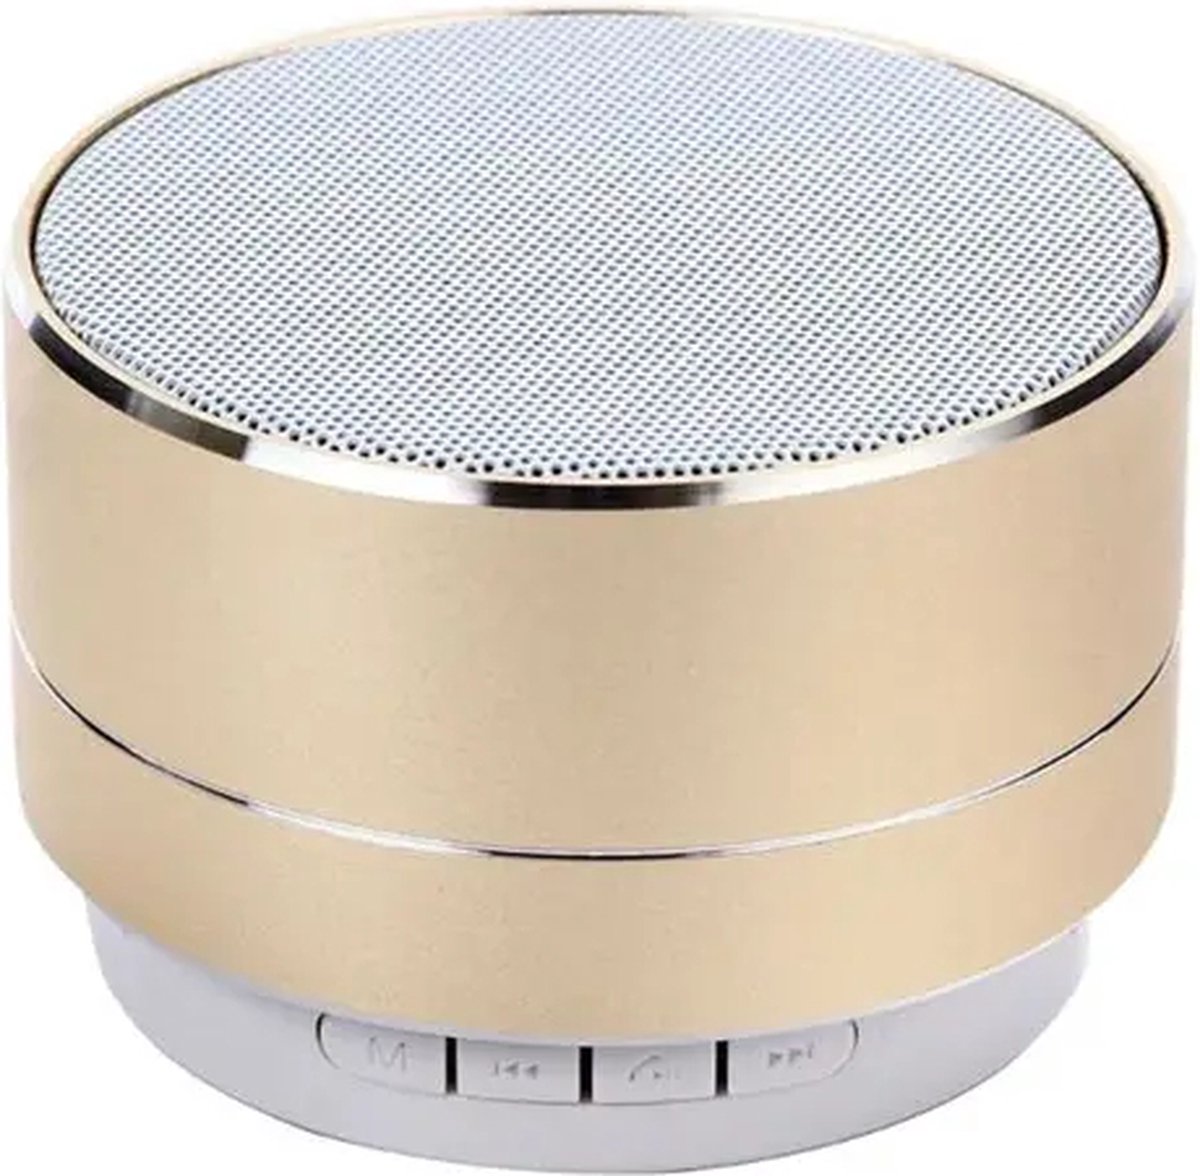 Keyway Bluetooth Speaker Goud - 7x7x5 cm - Draadloze Speaker - Bluetooth Speaker Waterproof - Wifi Speaker - Draadloos - Waterdicht - Waterbestendig